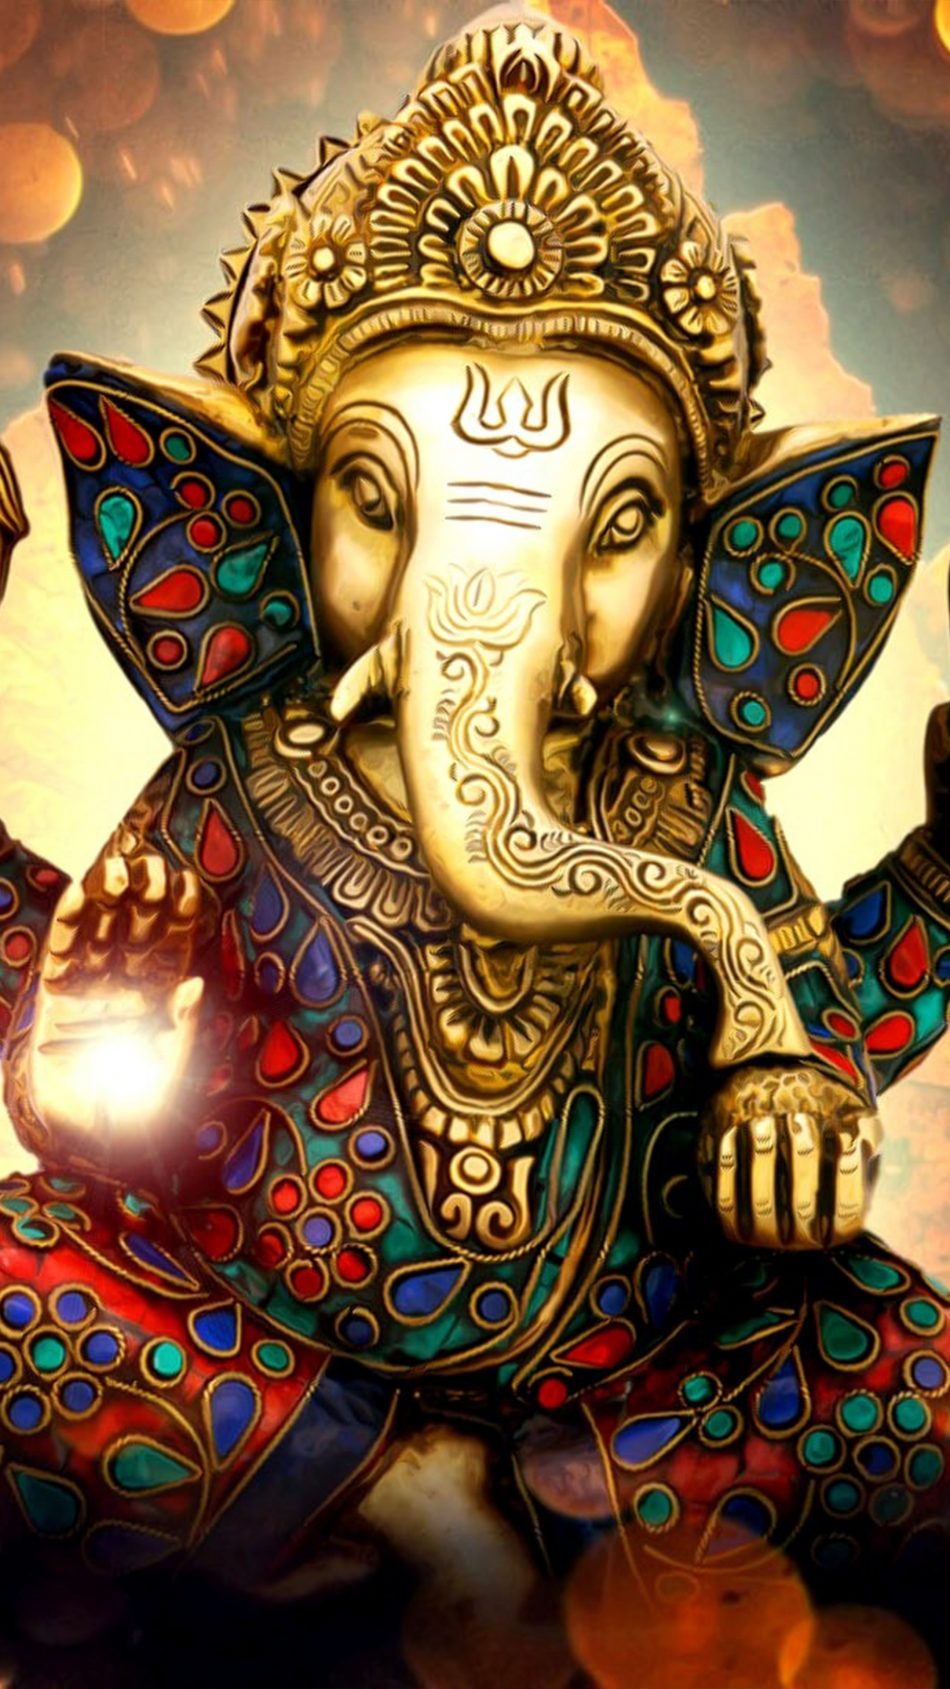 🔥 Amoled Ganesha Mobile Phone Wallpaper HD Download | MyGodImages